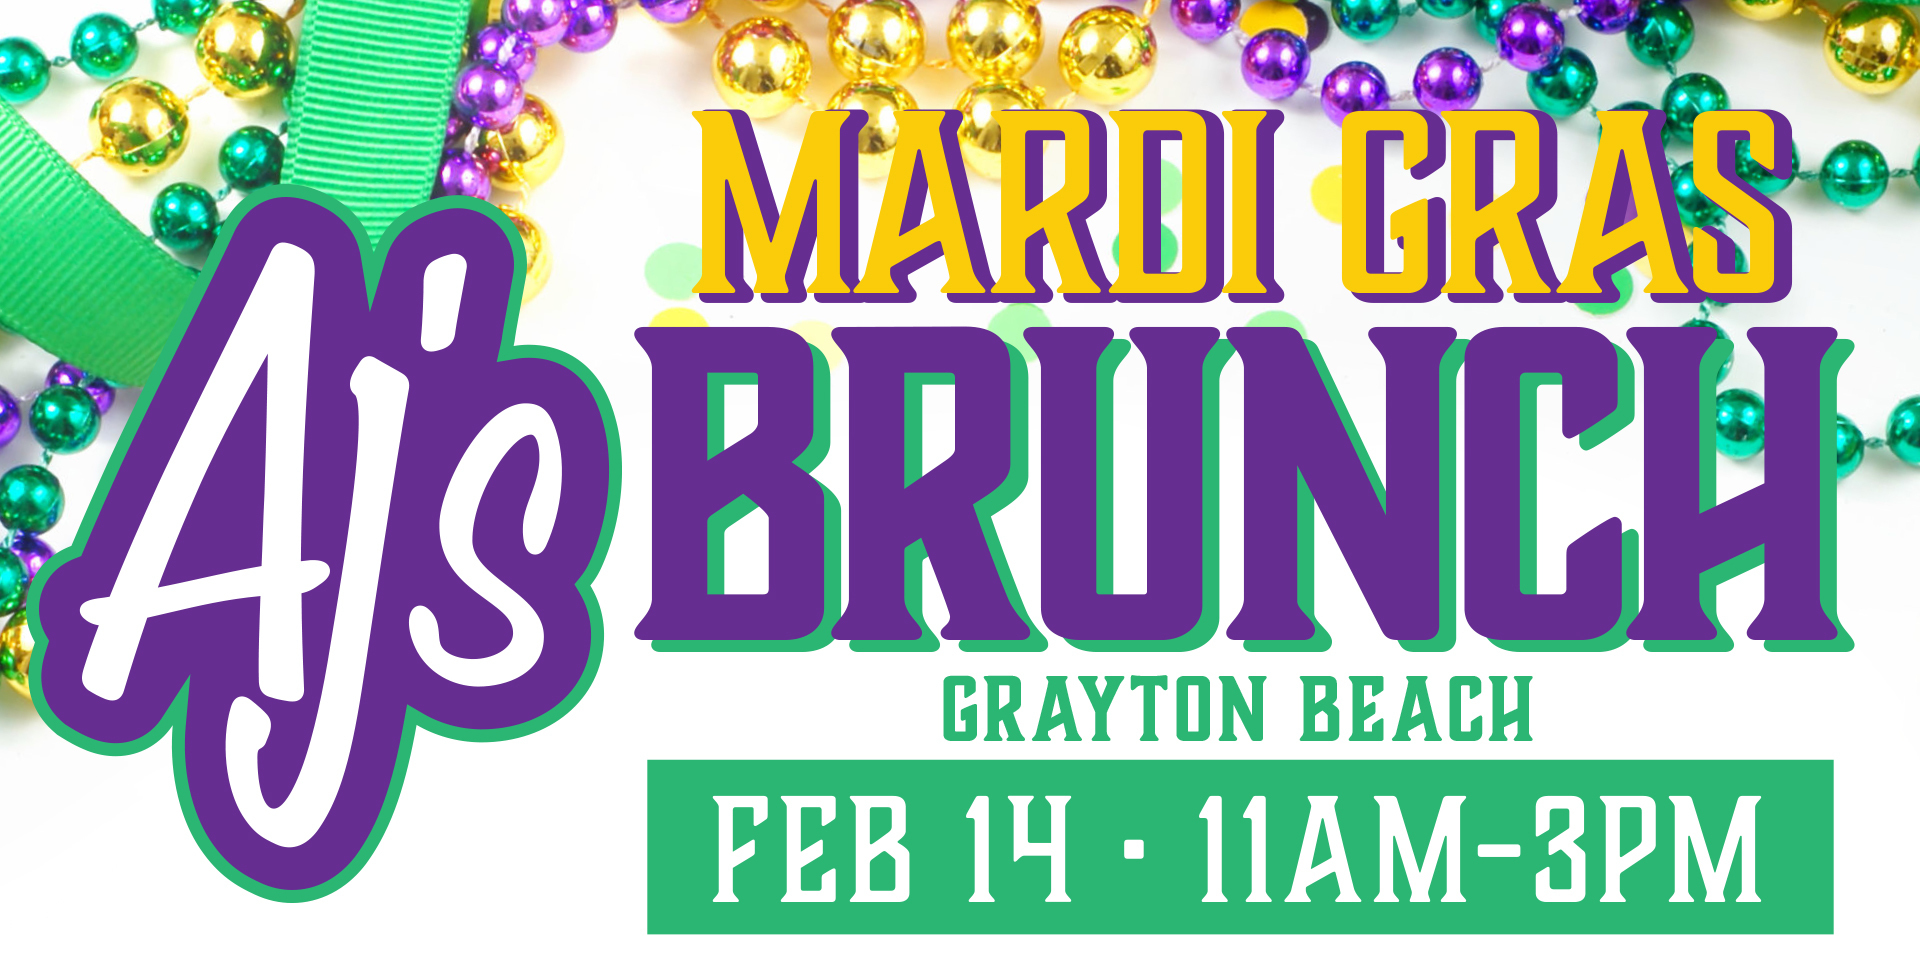 Mardi Gras Brunch, Santa Rosa Beach, Florida, United States